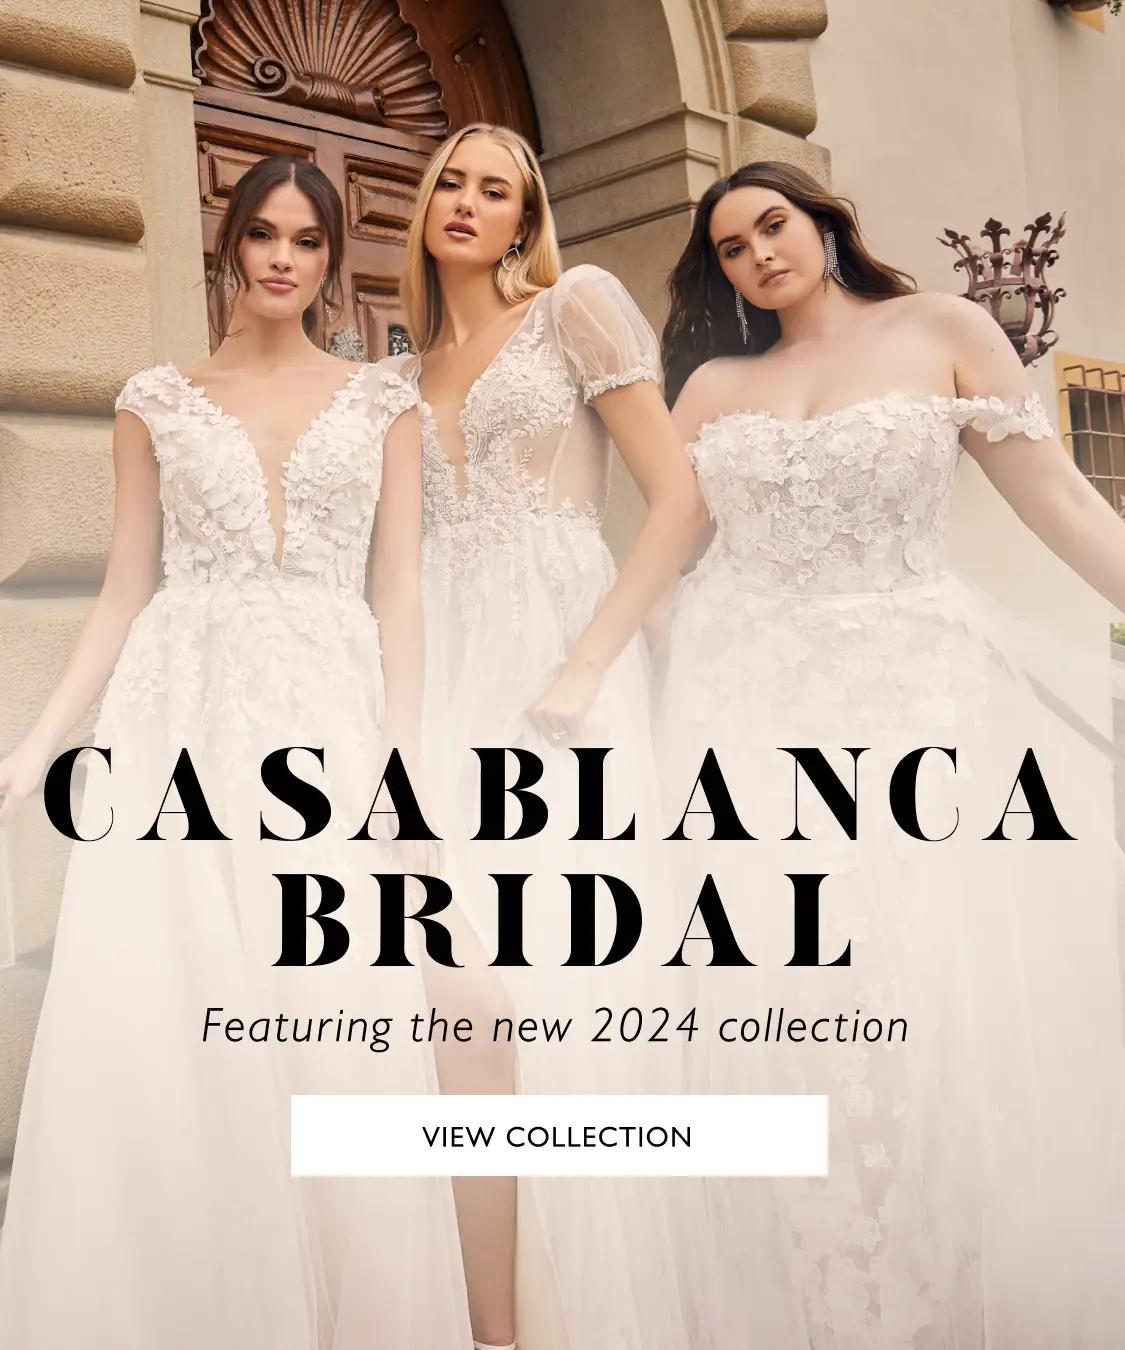 Casablanca Bridal 2024 collection